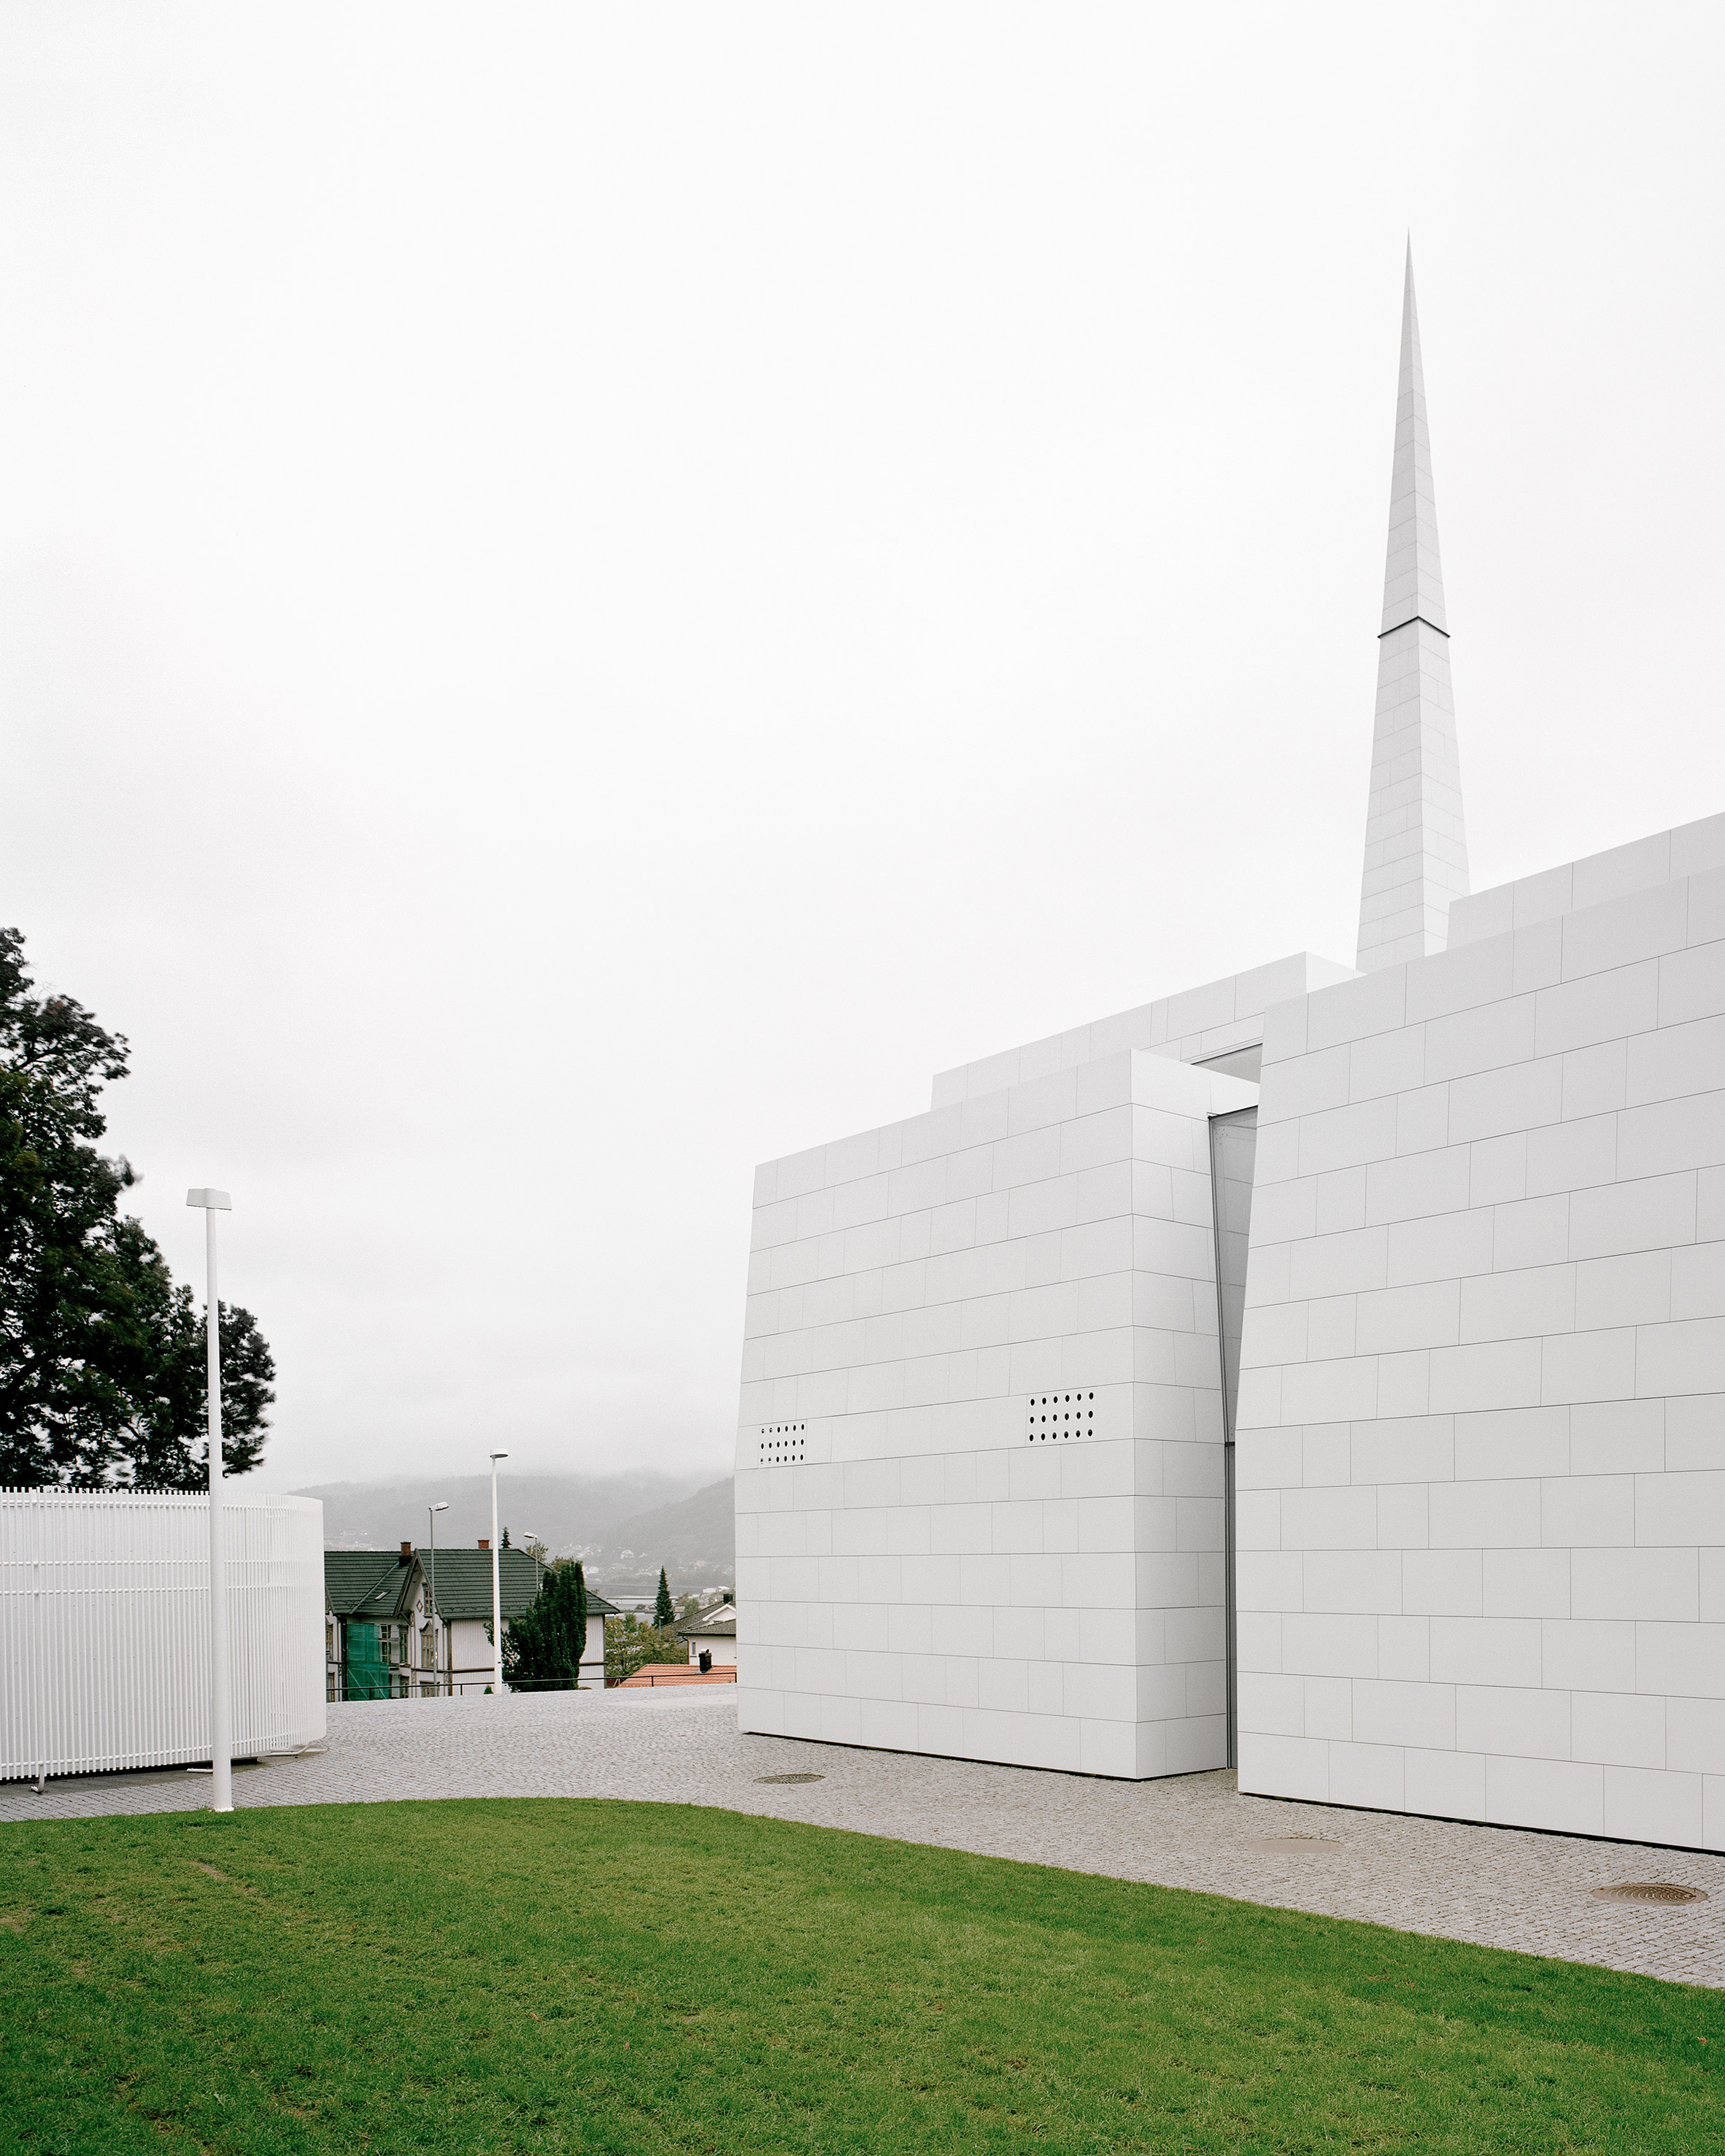 Porsgrunn church by Espen Surnevik in collaborationwith Trodahl Architects